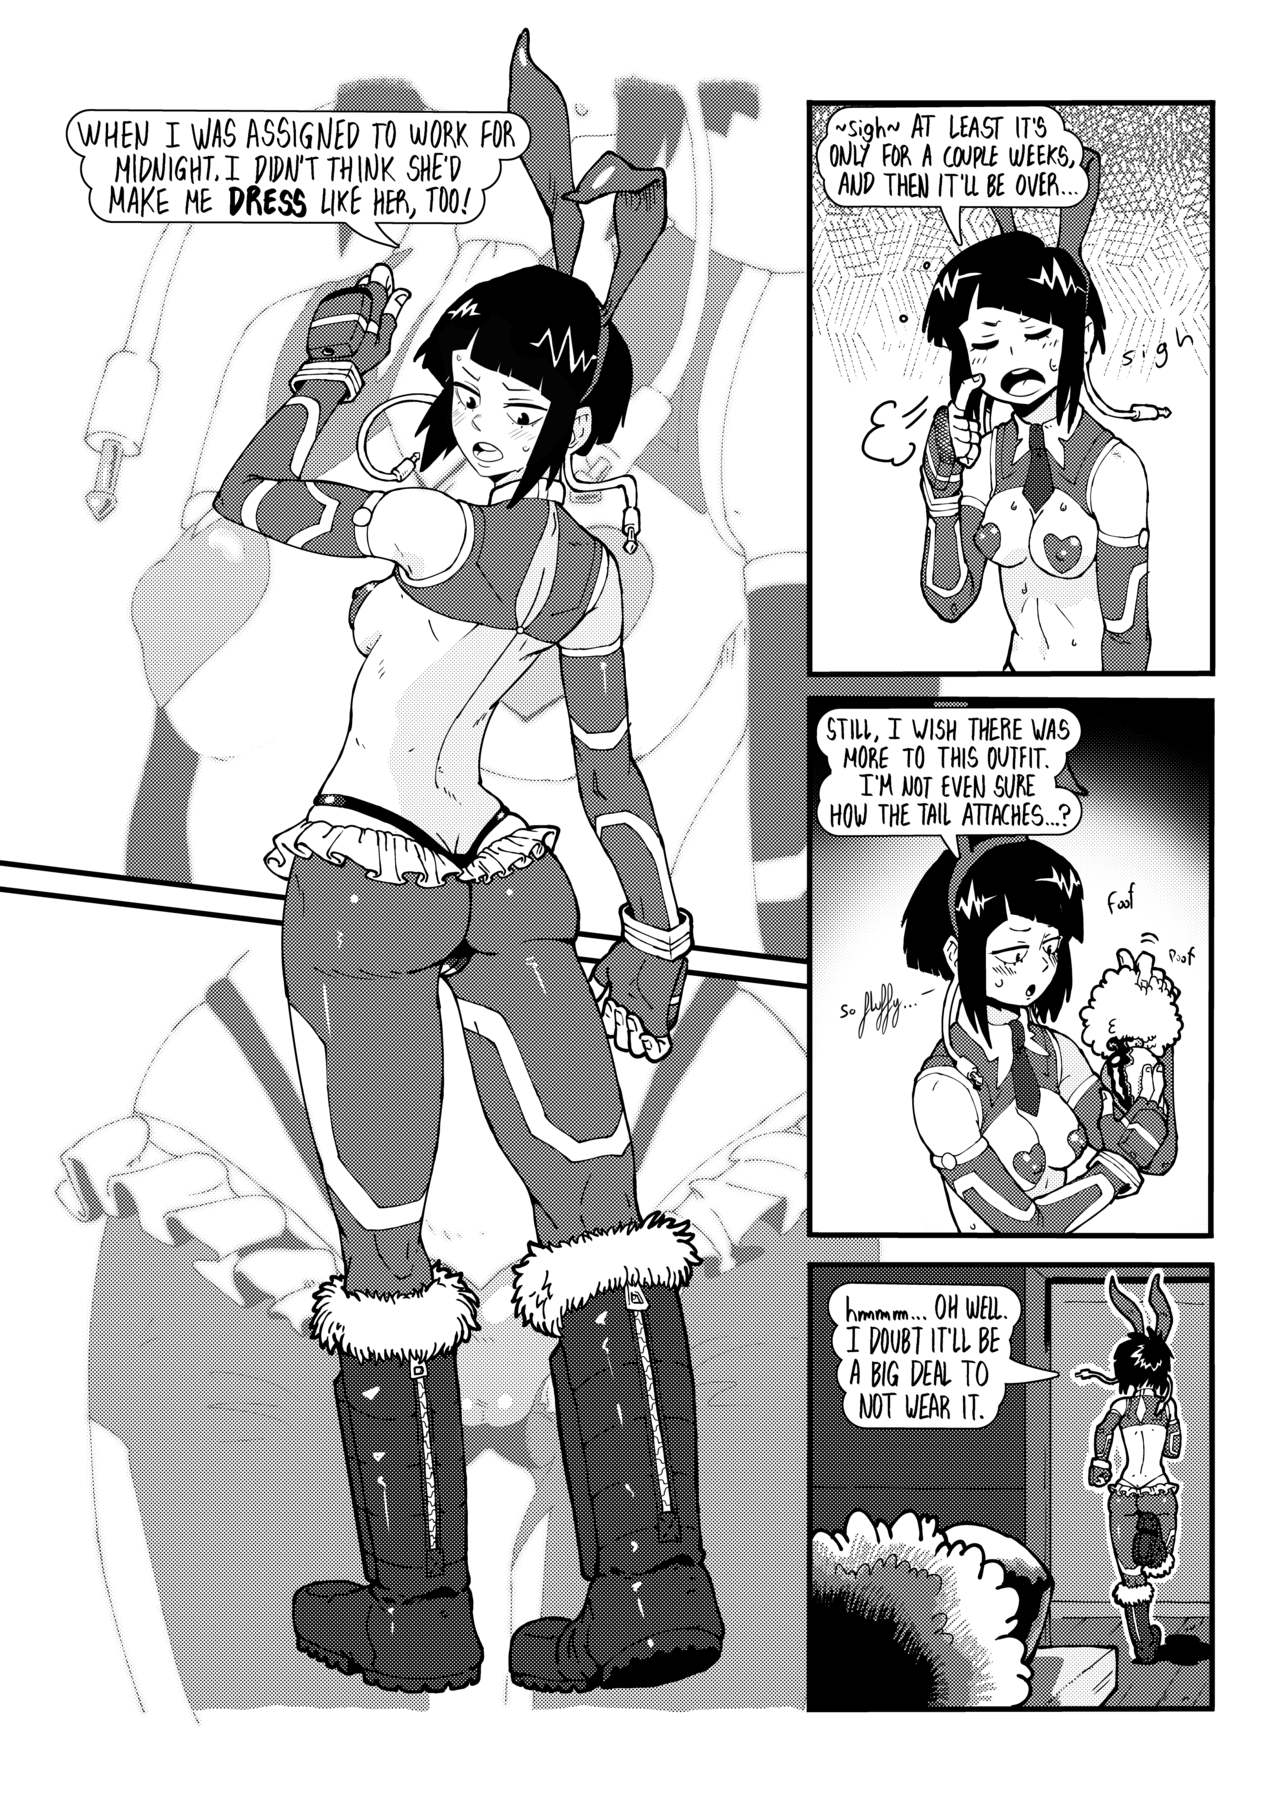 Jirou kyouka porn comics